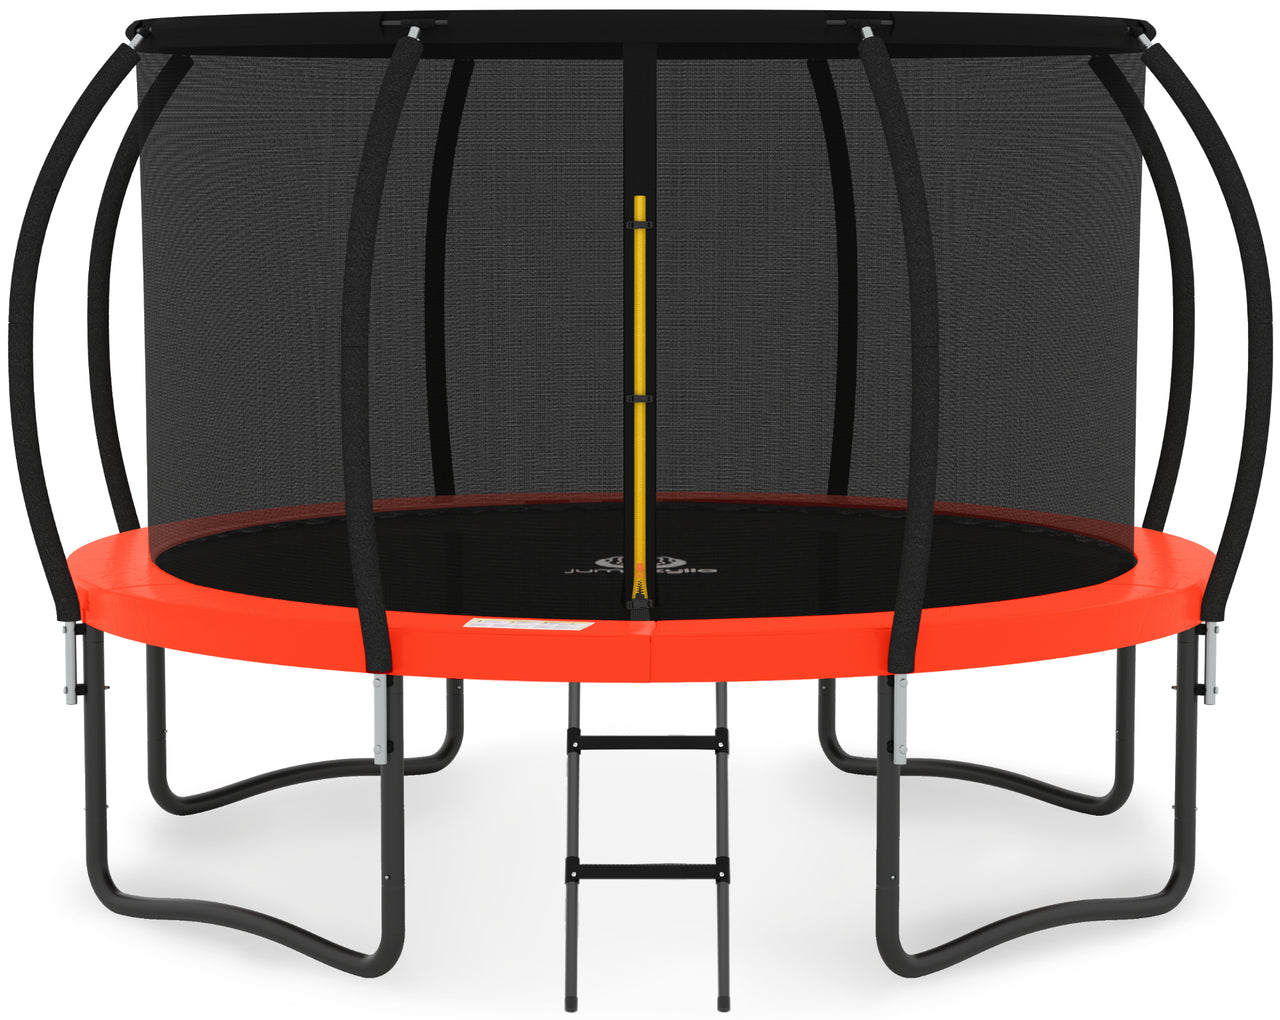 Jumpzylla 10FT Trampoline with Enclosure & Double Color Pad Cover Enclosure